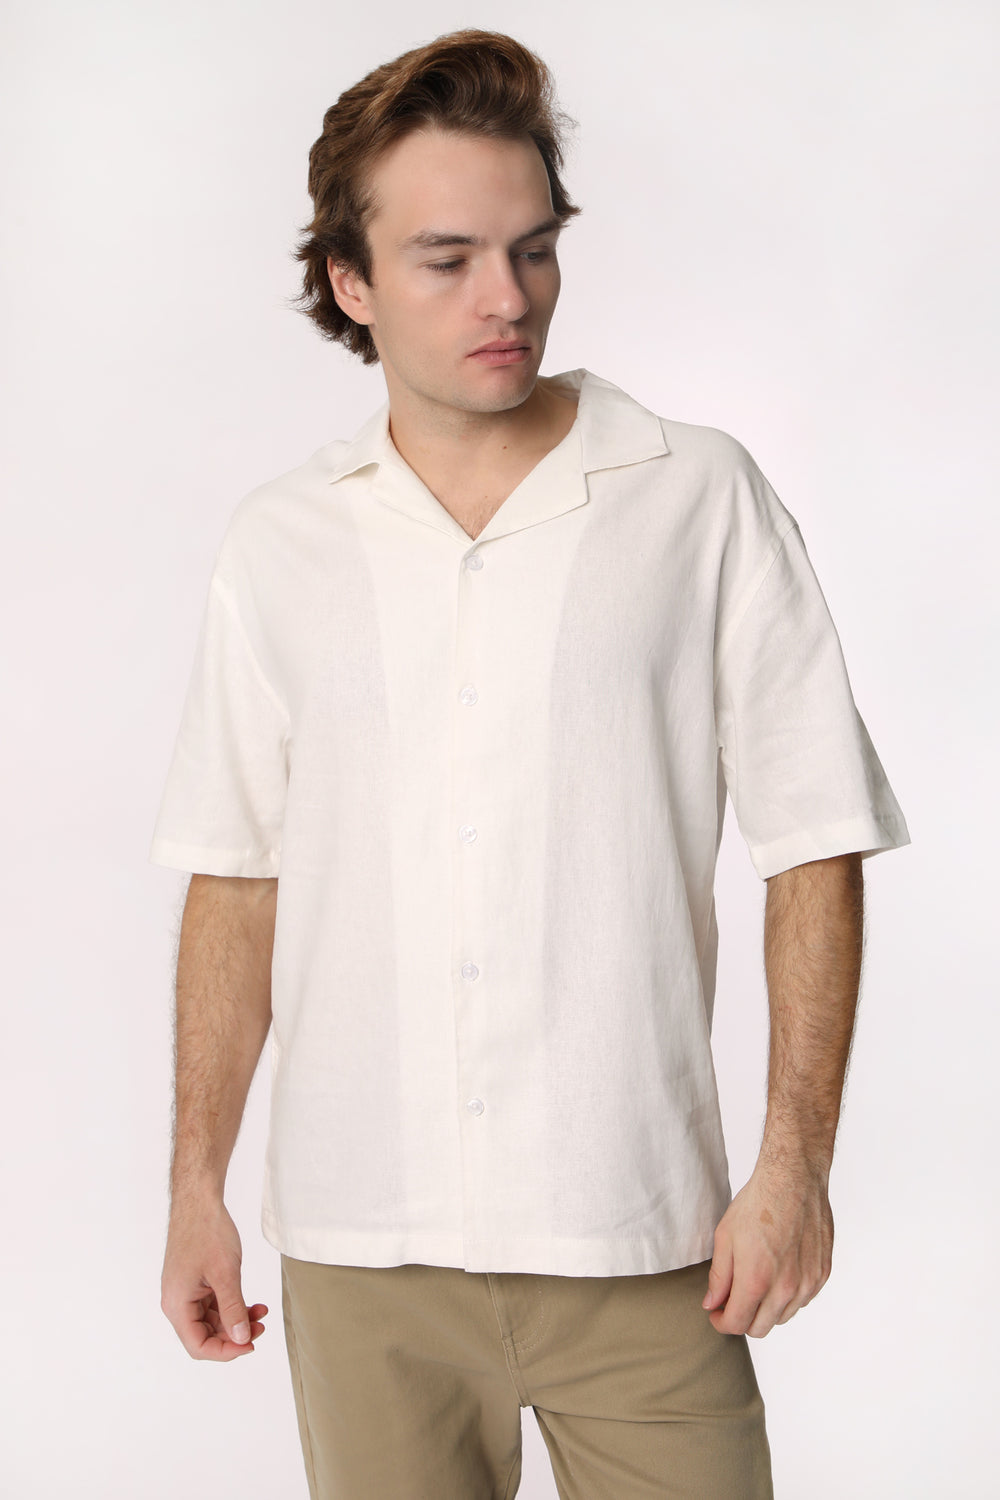 West49 Mens Linen Button-Up White